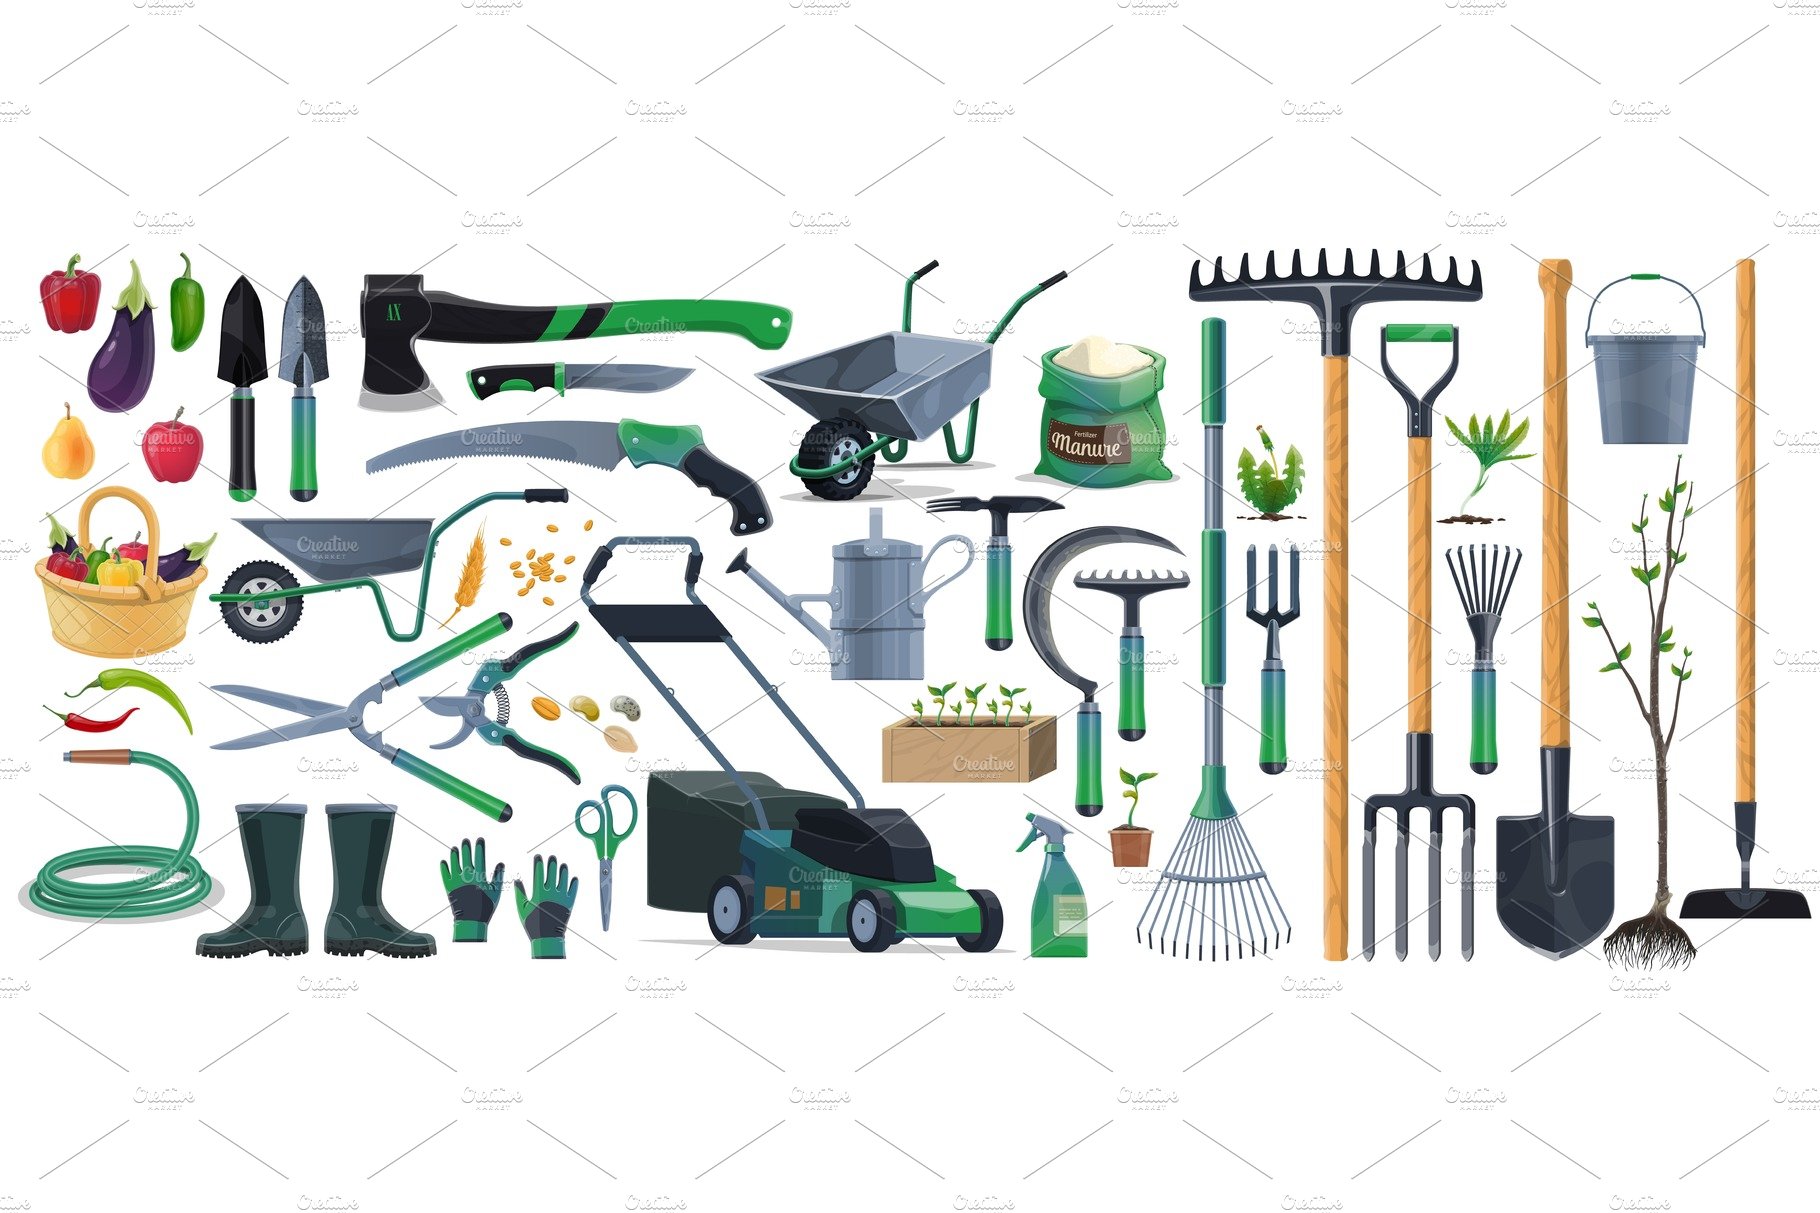 Garden tools, equipment cover image.